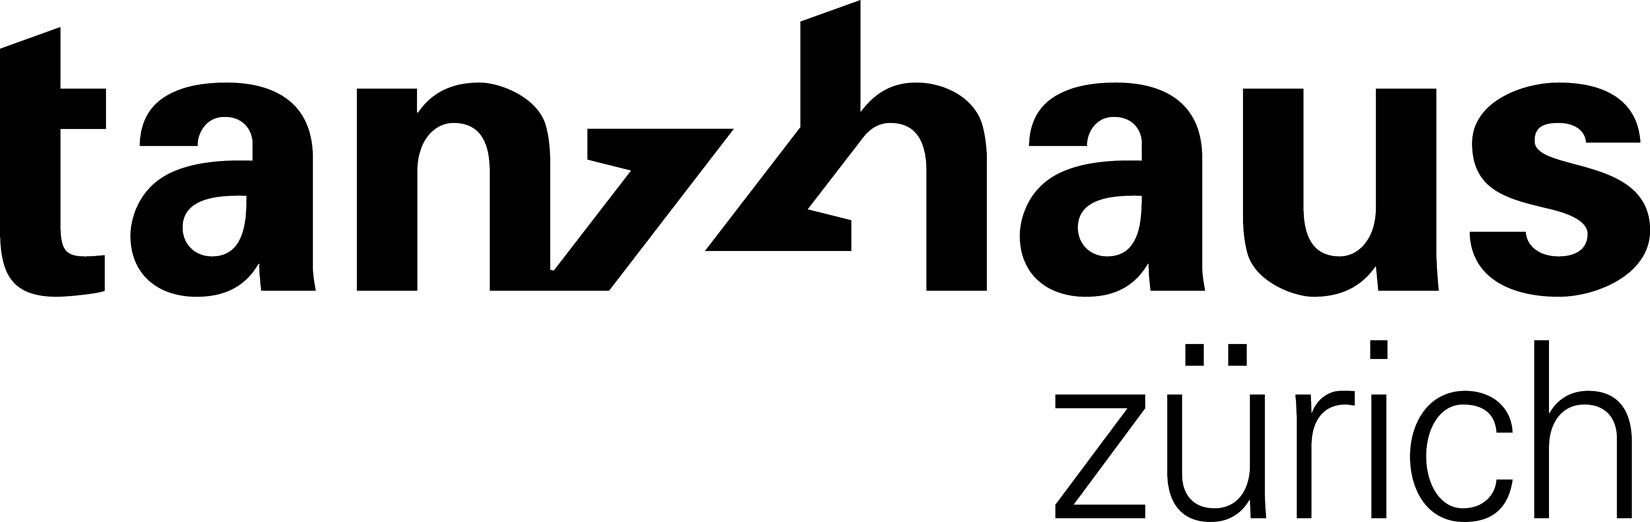 Thzh logo 300